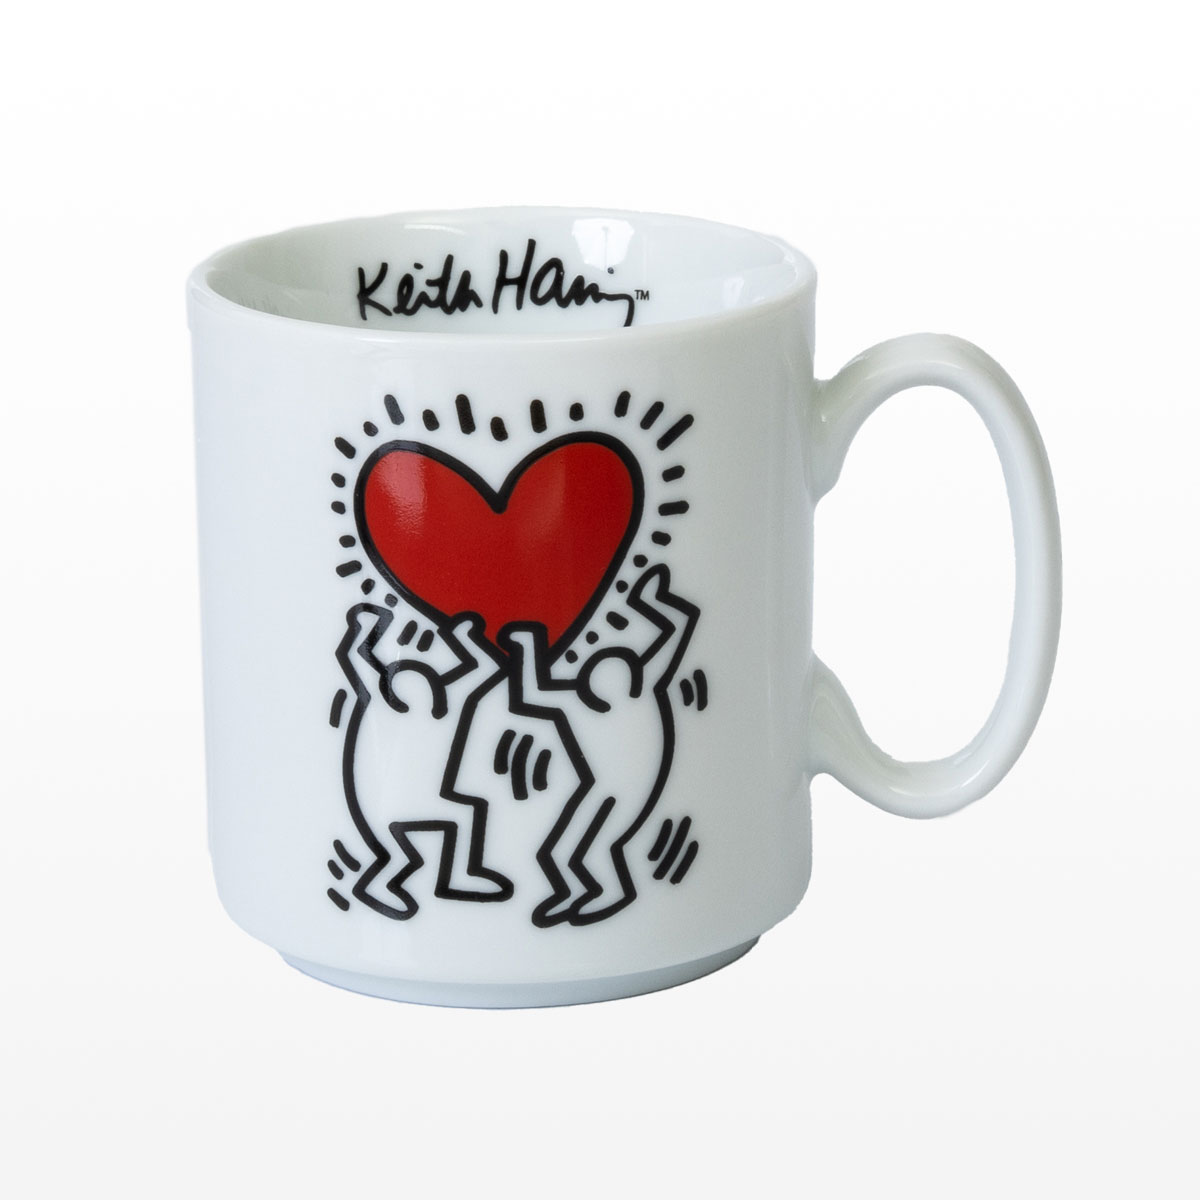 Keith Haring mug : Heart & Dancers - 2 Characters